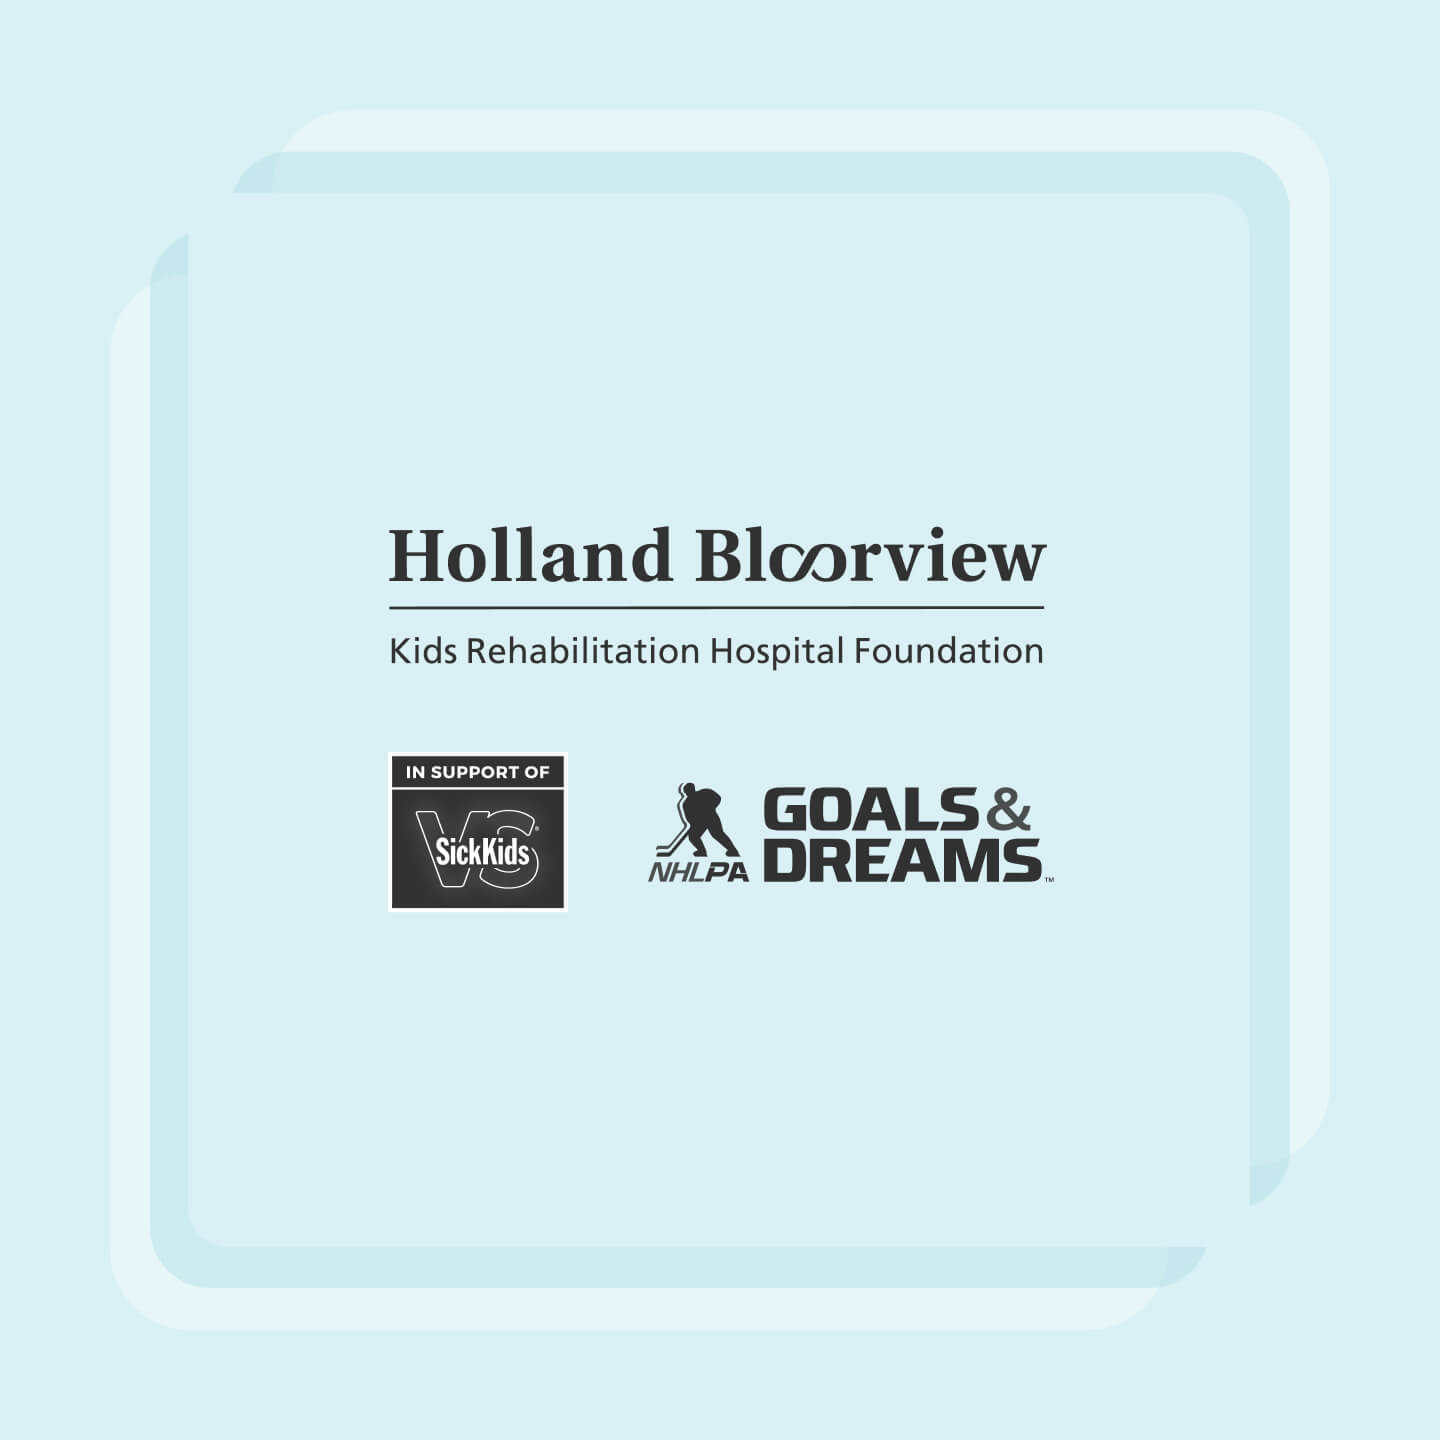 SickKids Foundation partnered with Sonnet Holland Bloorview Hospital partnered with Sonnet NHLPA Goals & Dreams partnered with Sonnet